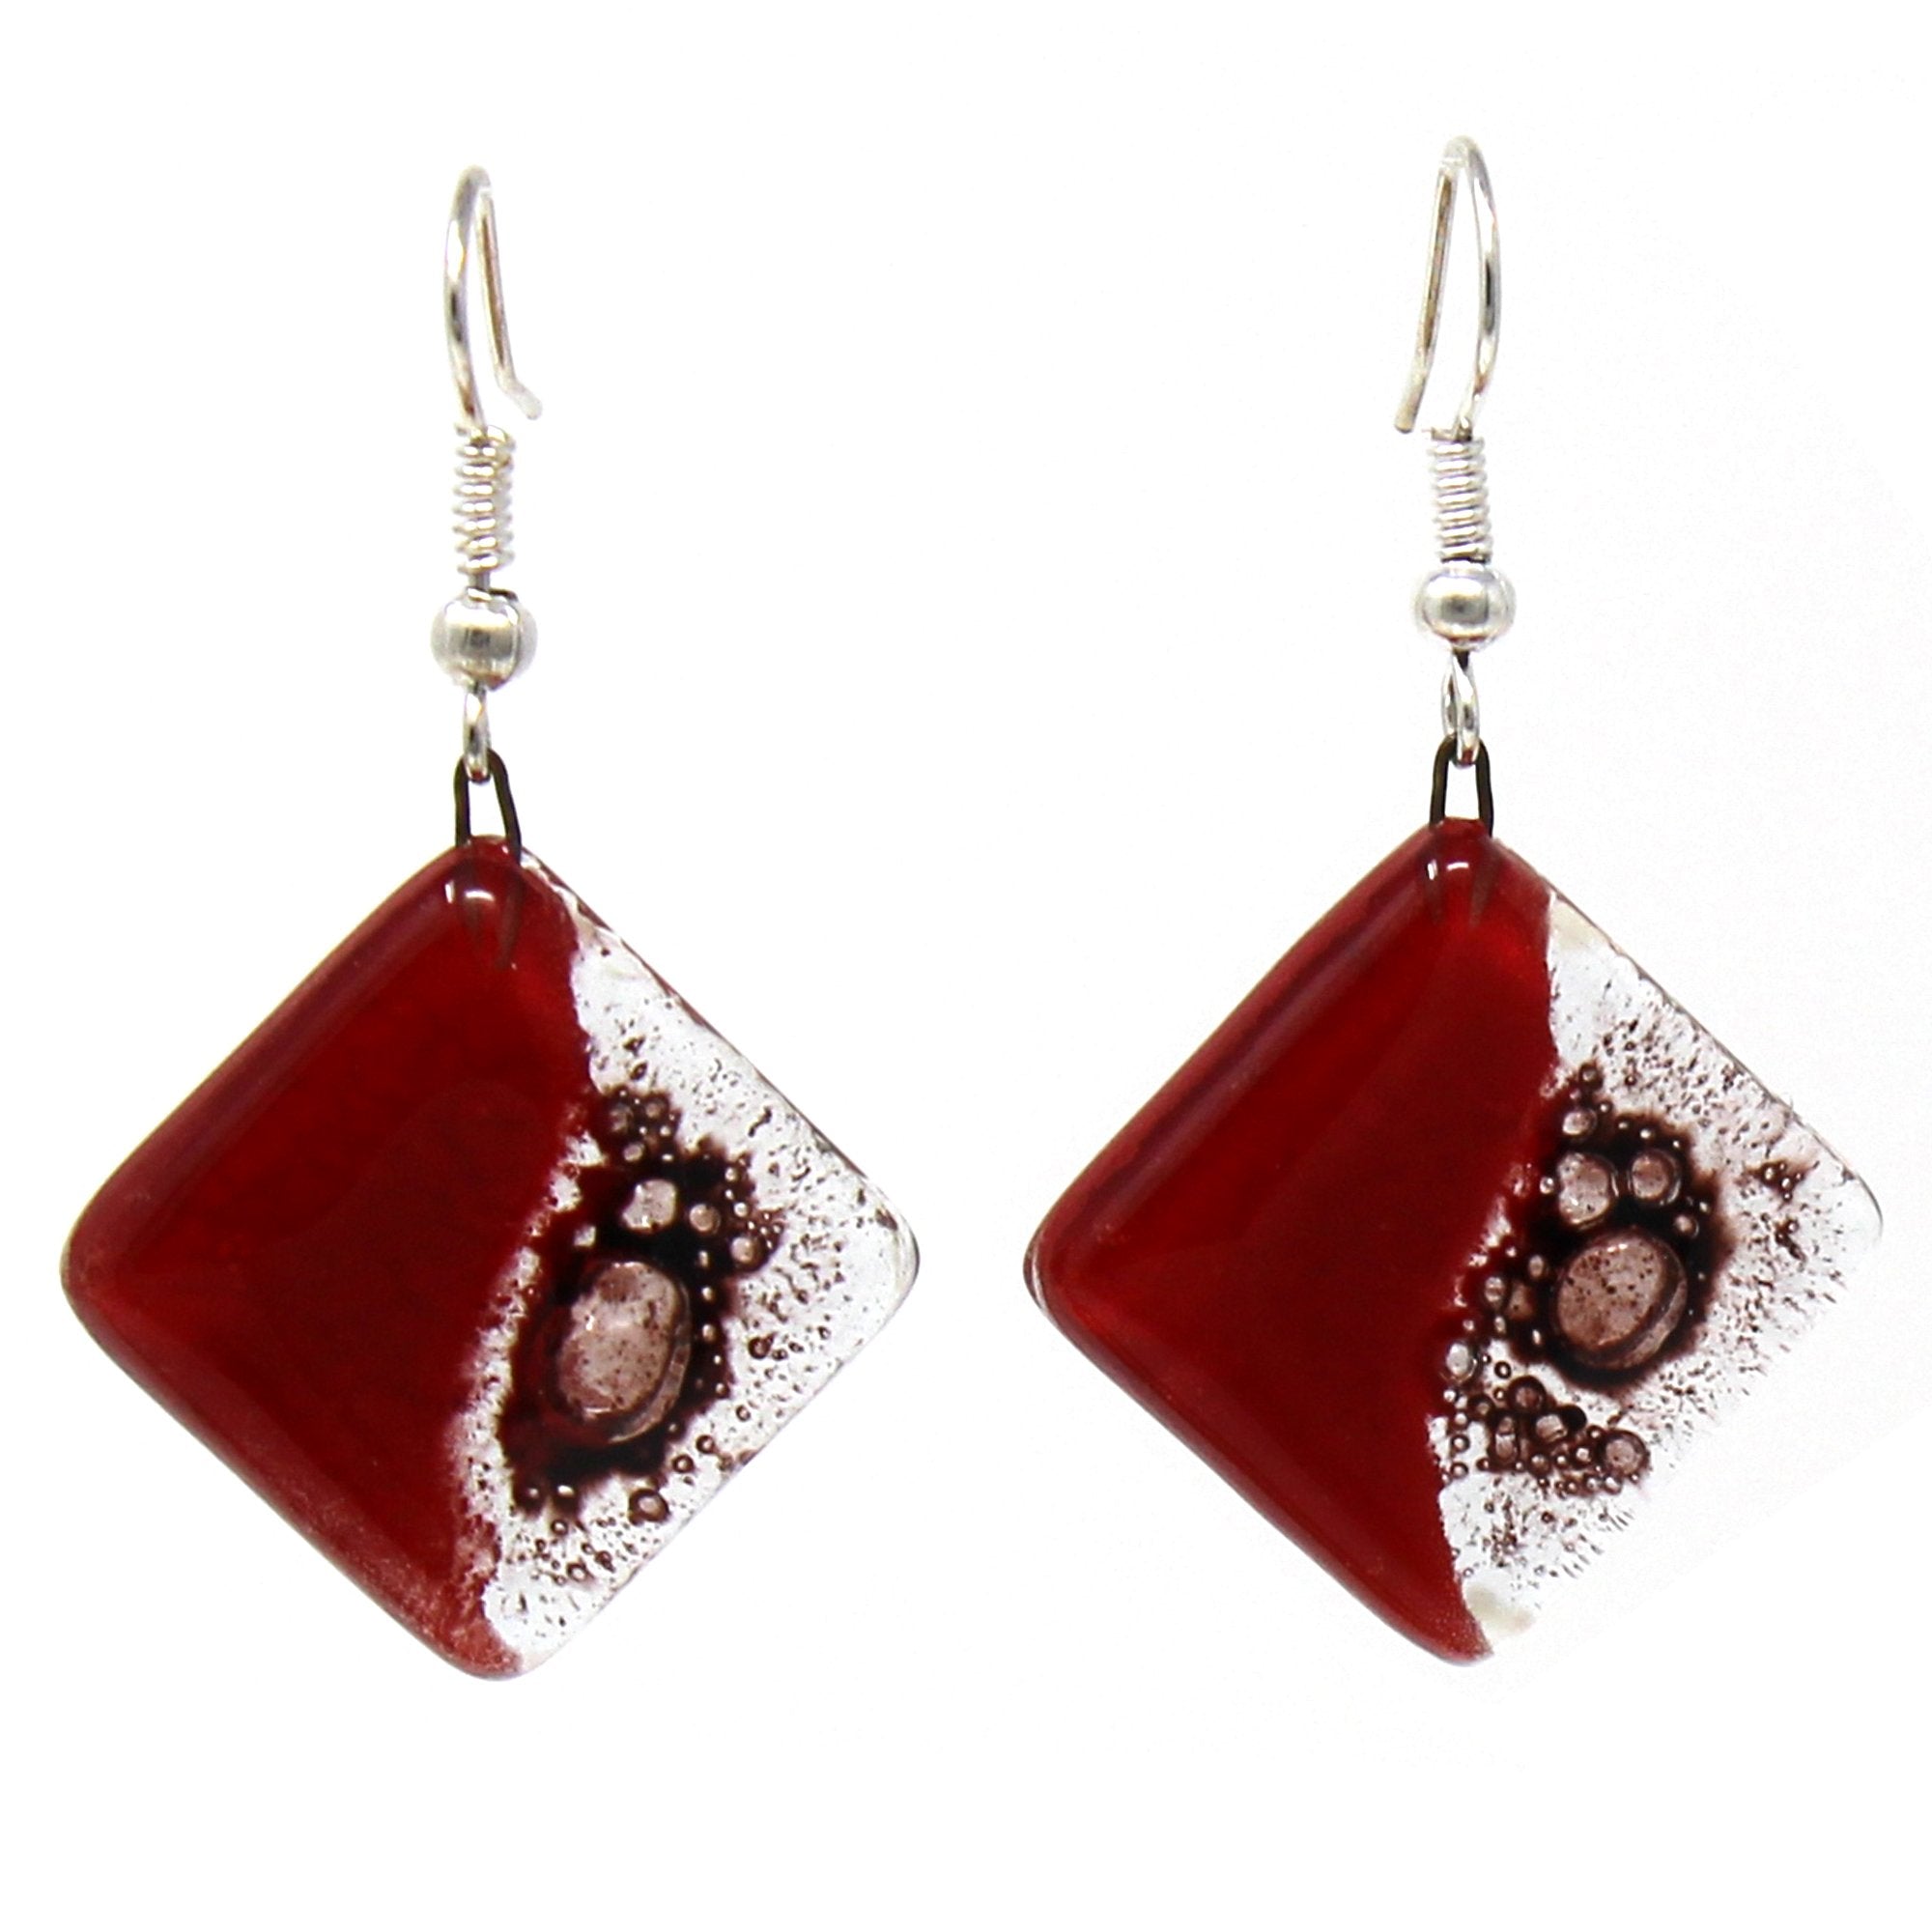 Angelco Accessories Chilean glass rhombus earrings